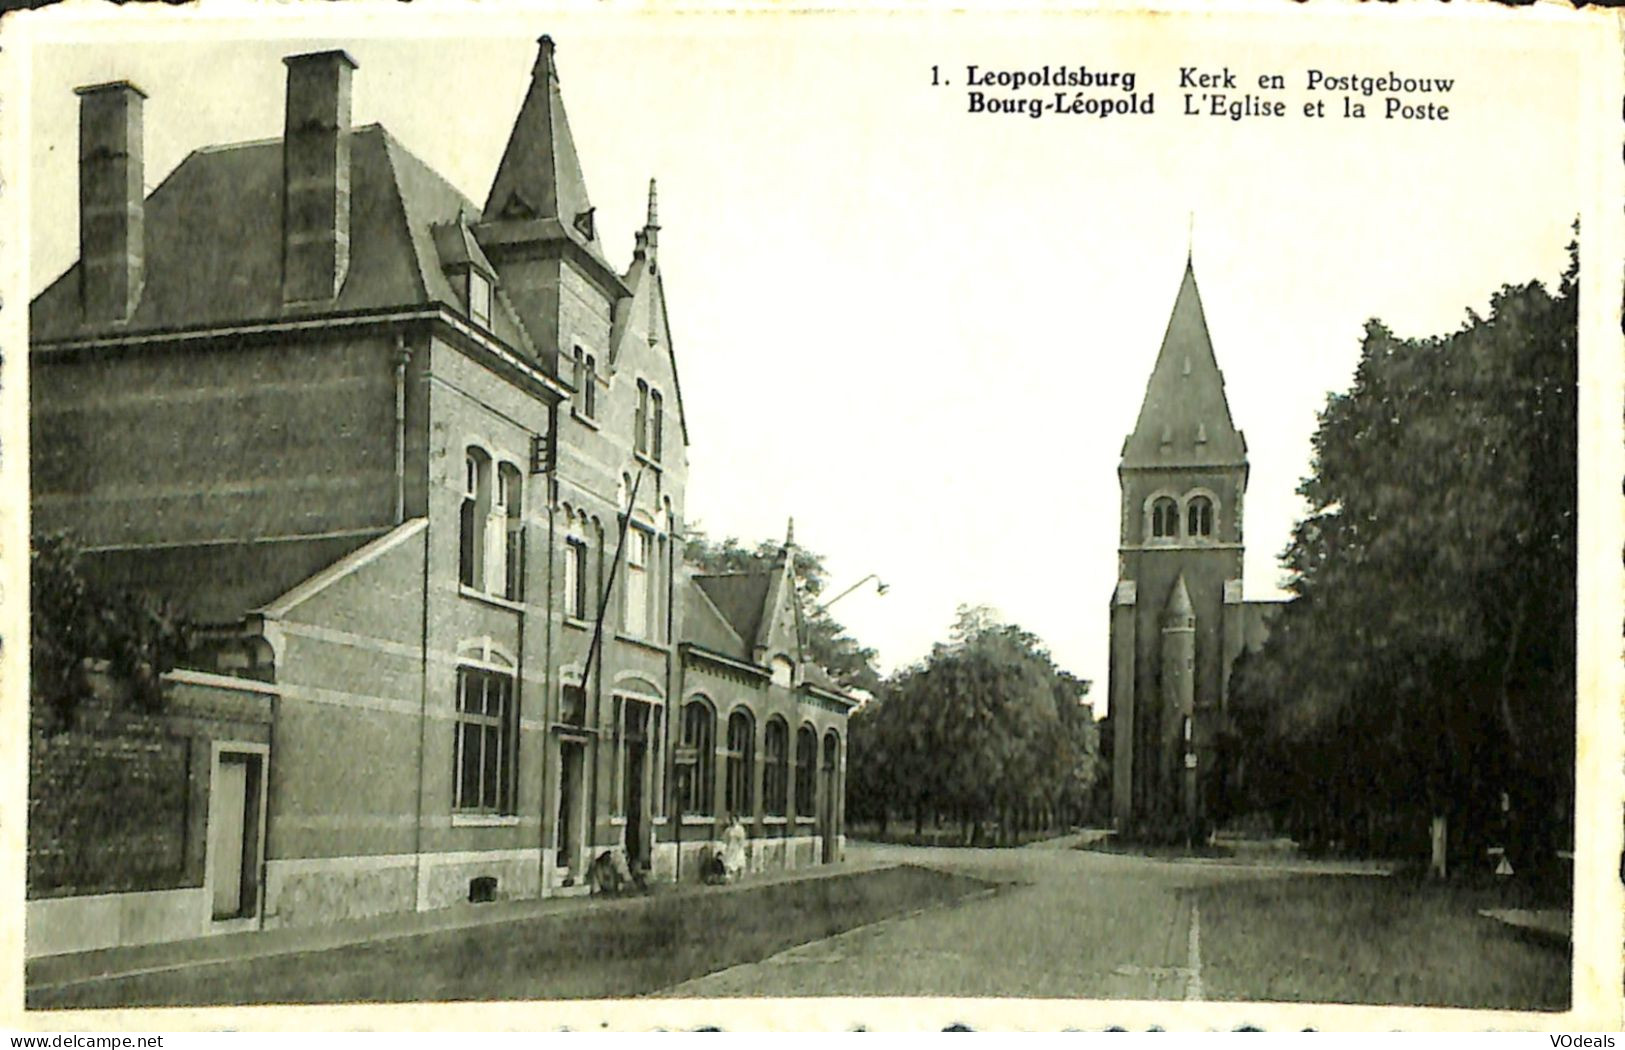 Belgique - Limbourg - Leopoldsburg - Bourg-Léopold - L'Eglise Et La Poste - Kerk En Postgebouw - Leopoldsburg